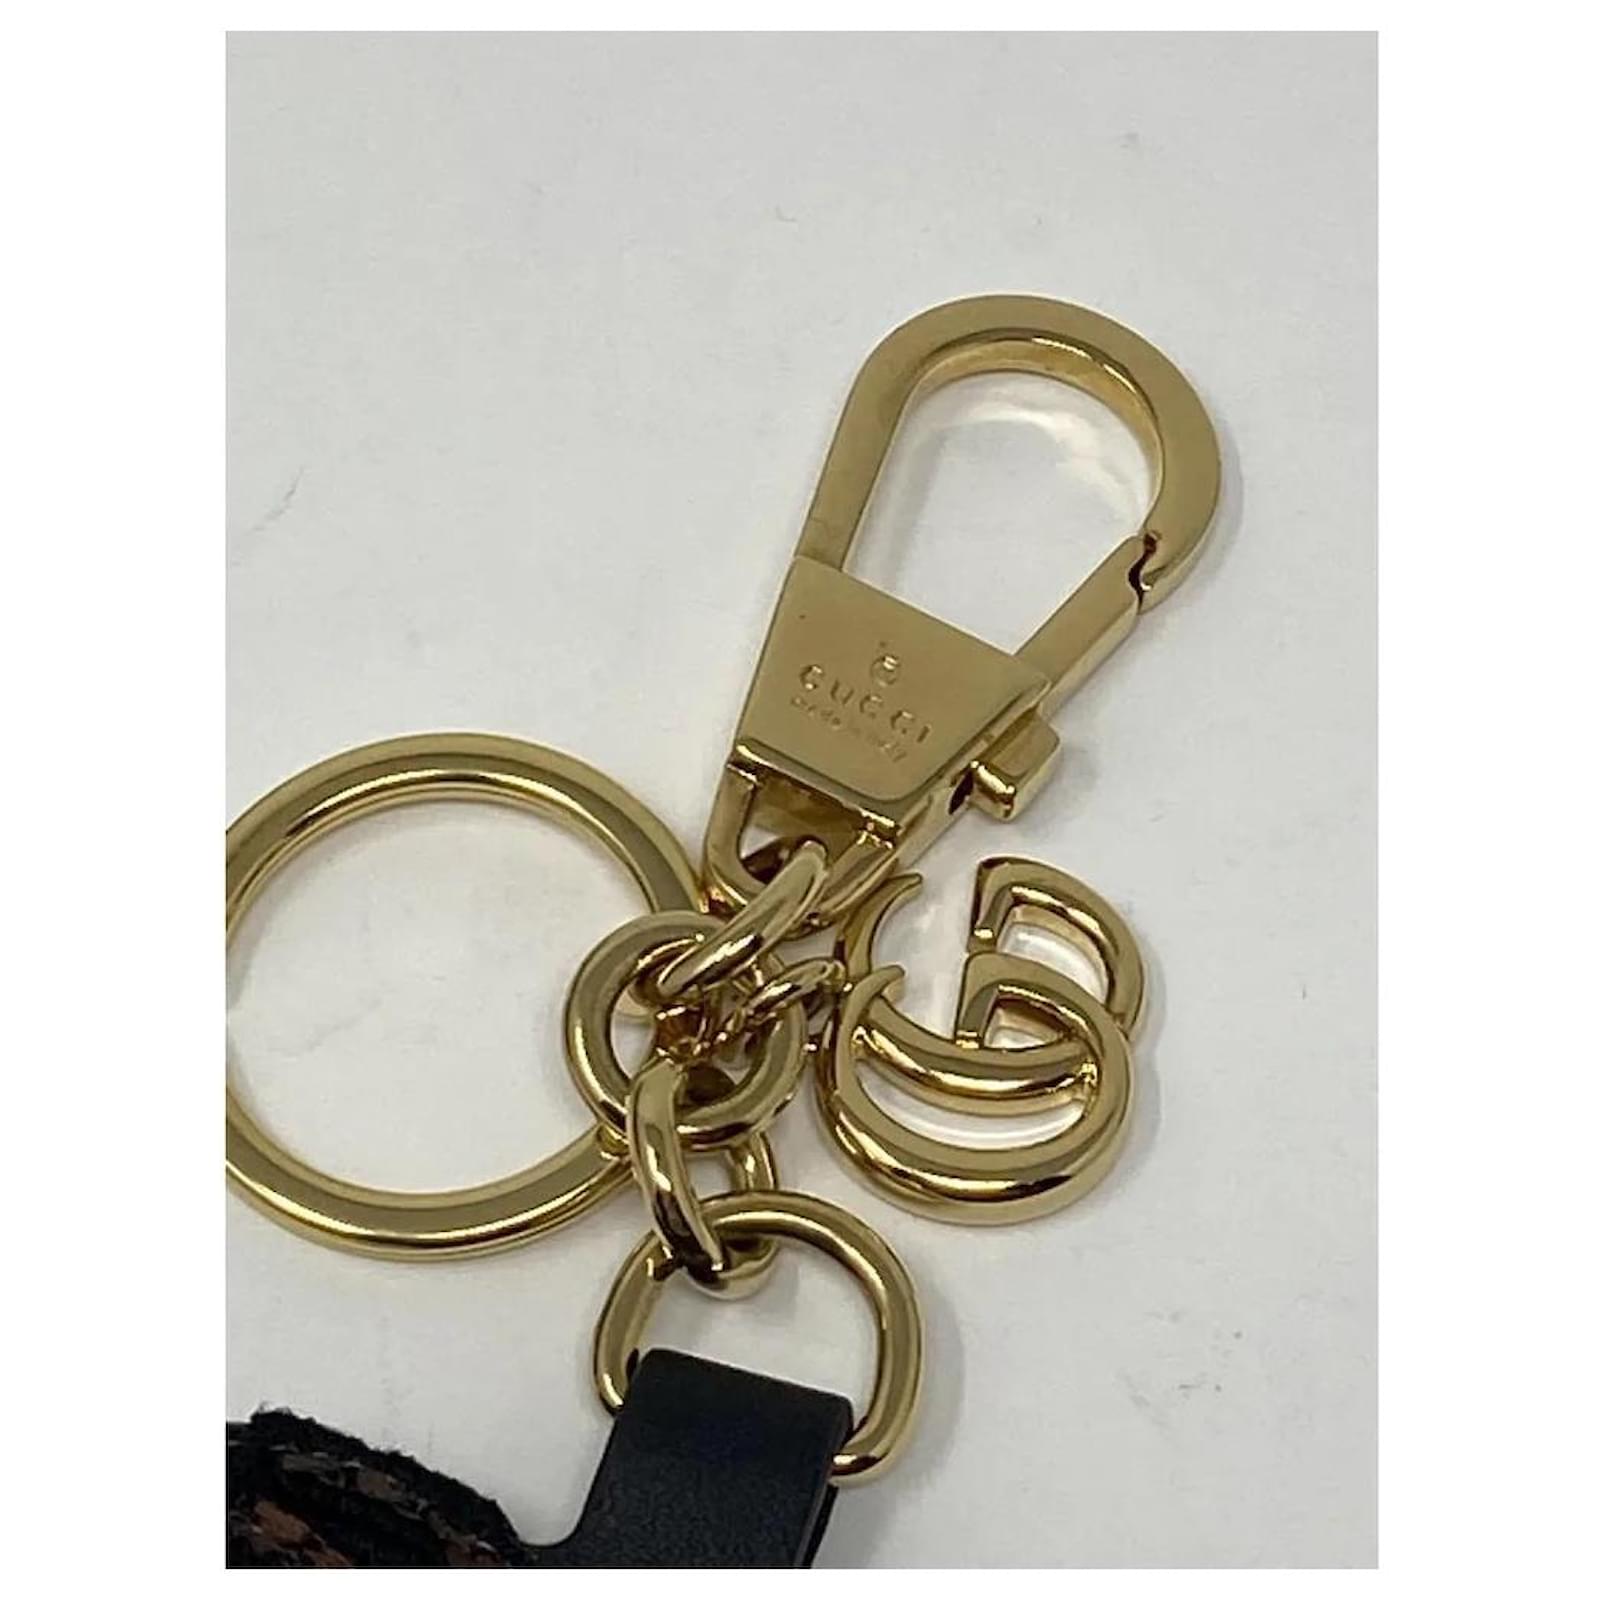 Louis Vuitton Supreme Key Chain Gold Tone Metal Brown Leather